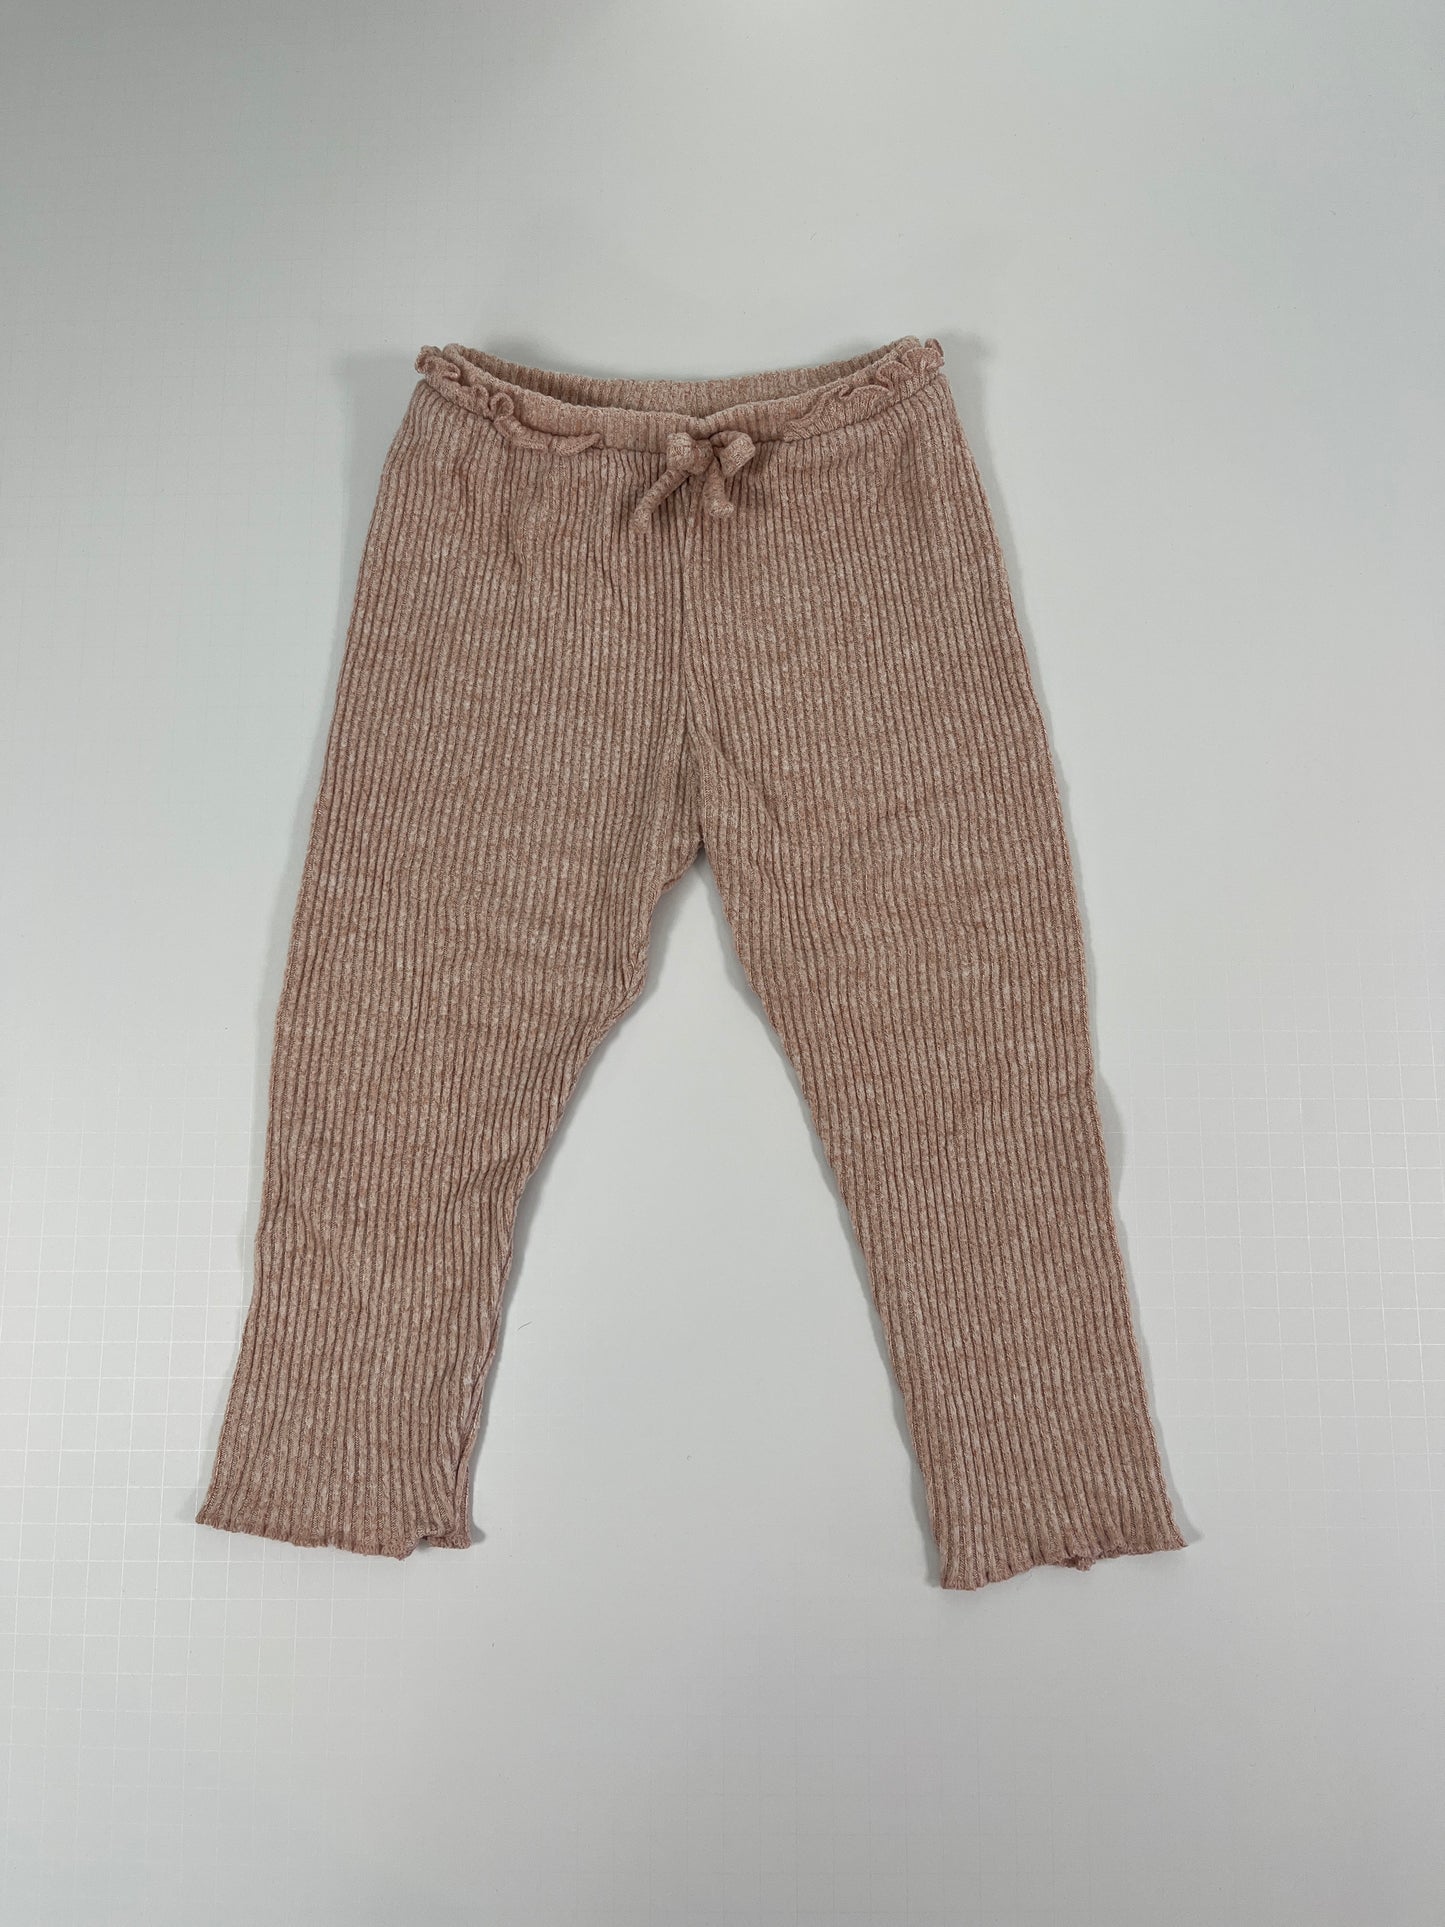 PPU 45242 2T (2-3y) girls Zara ribbed knit pants with ruffles